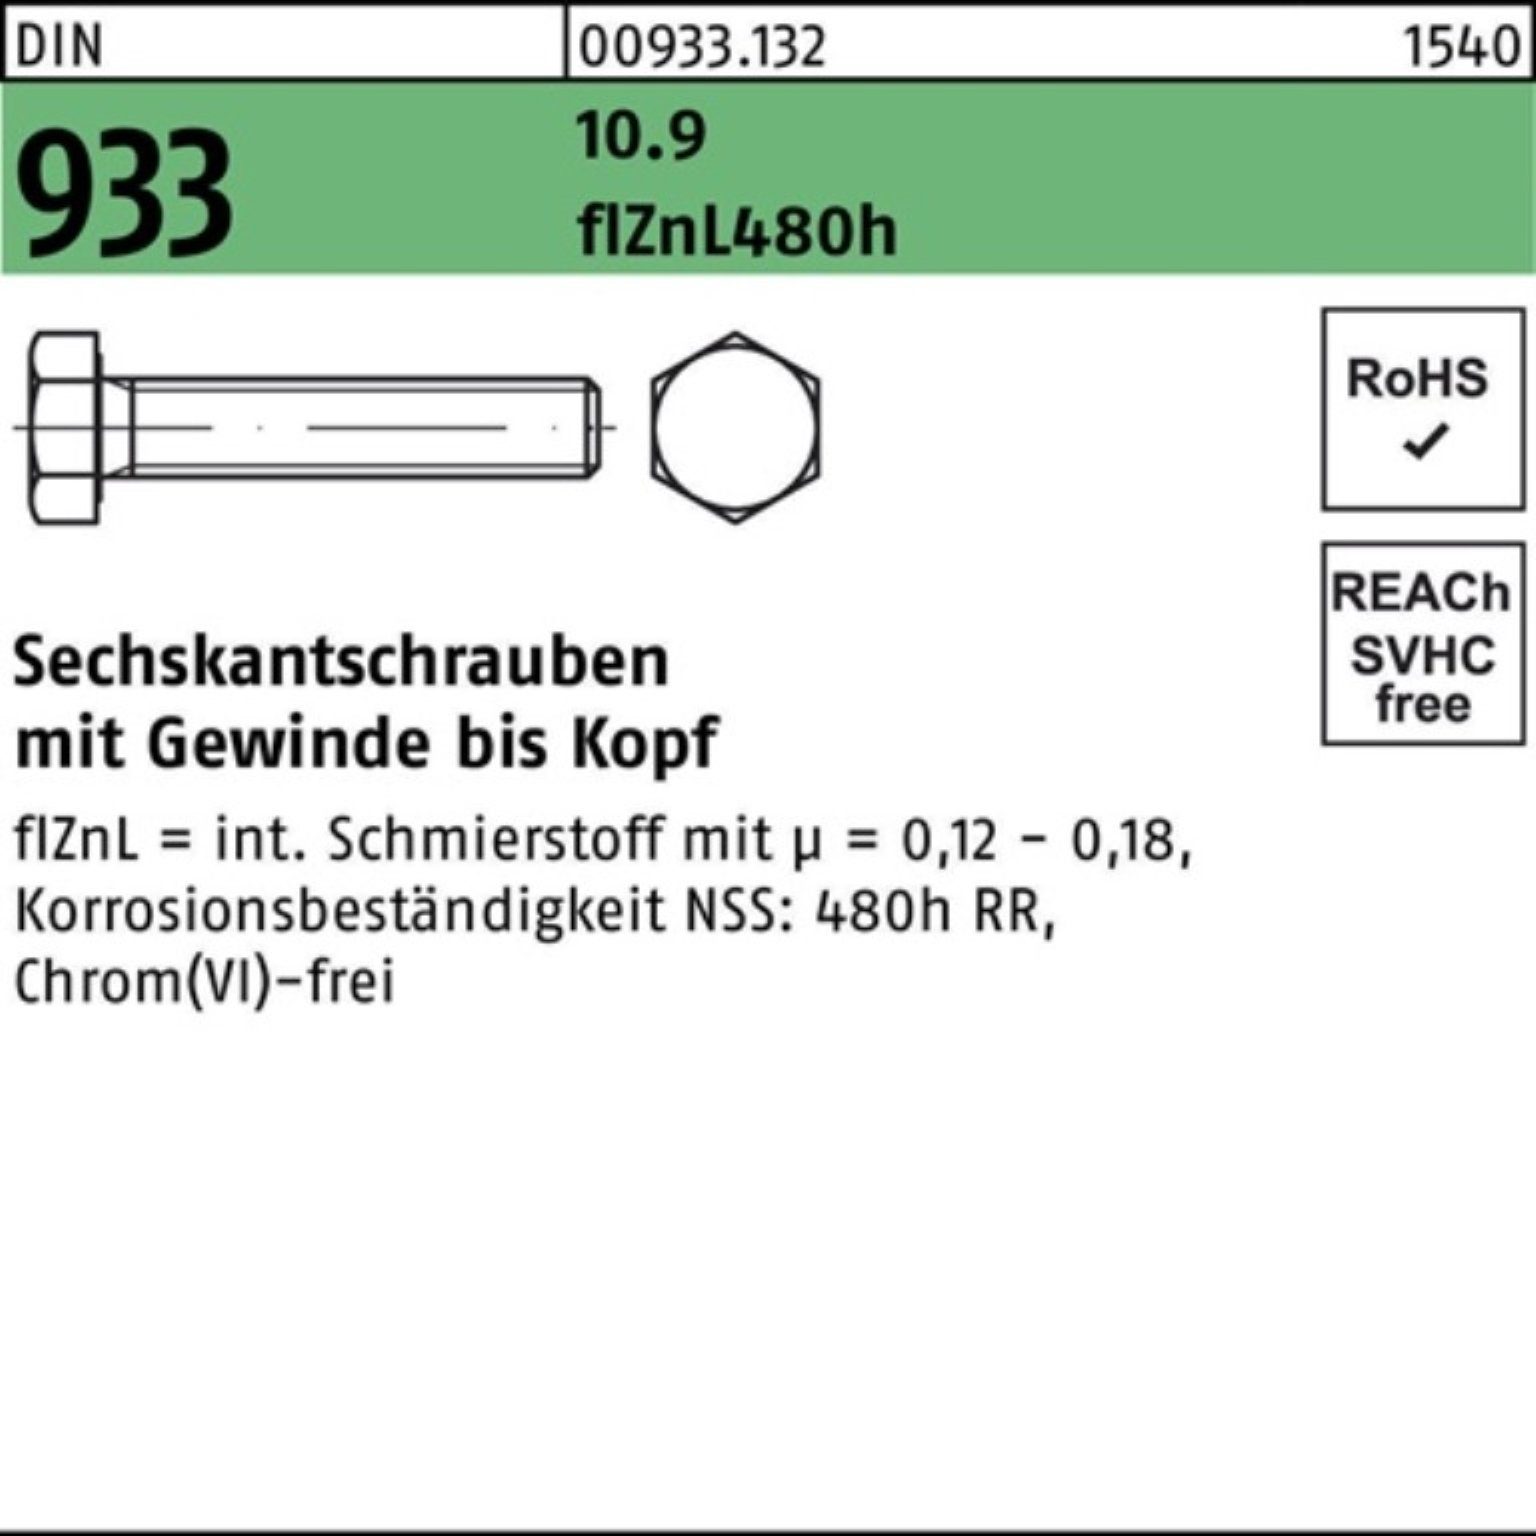 Pack 10.9 Sechskantschraube 100er Sechskantschraube M24x Reyher VG 60 flZnL/nc/x/x/480h DIN 933